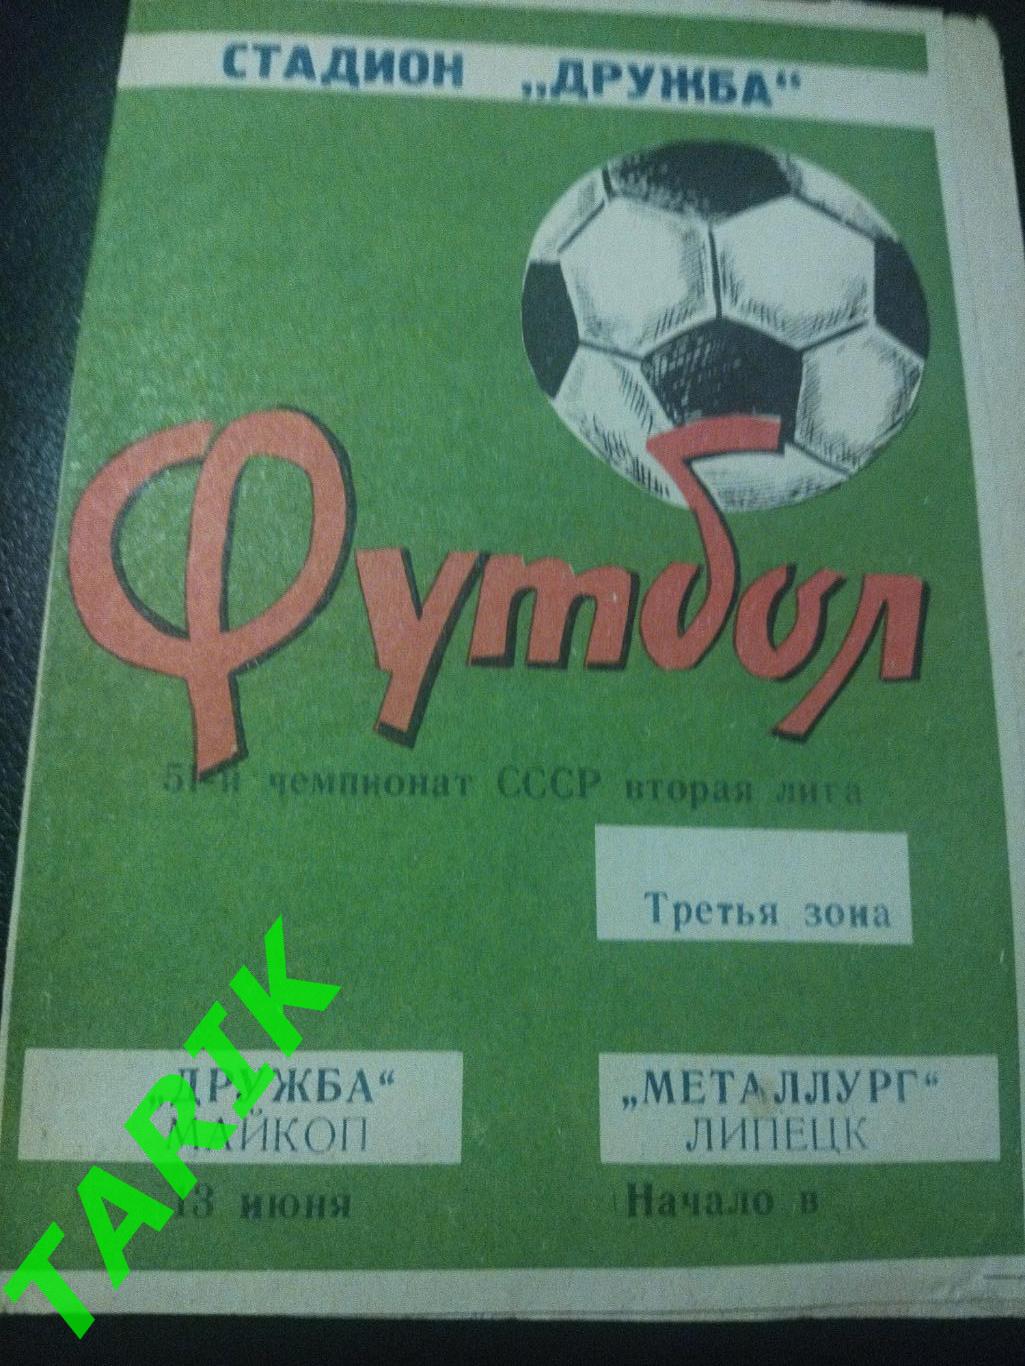 Дружба Майкоп - Металлург Липецк 1988